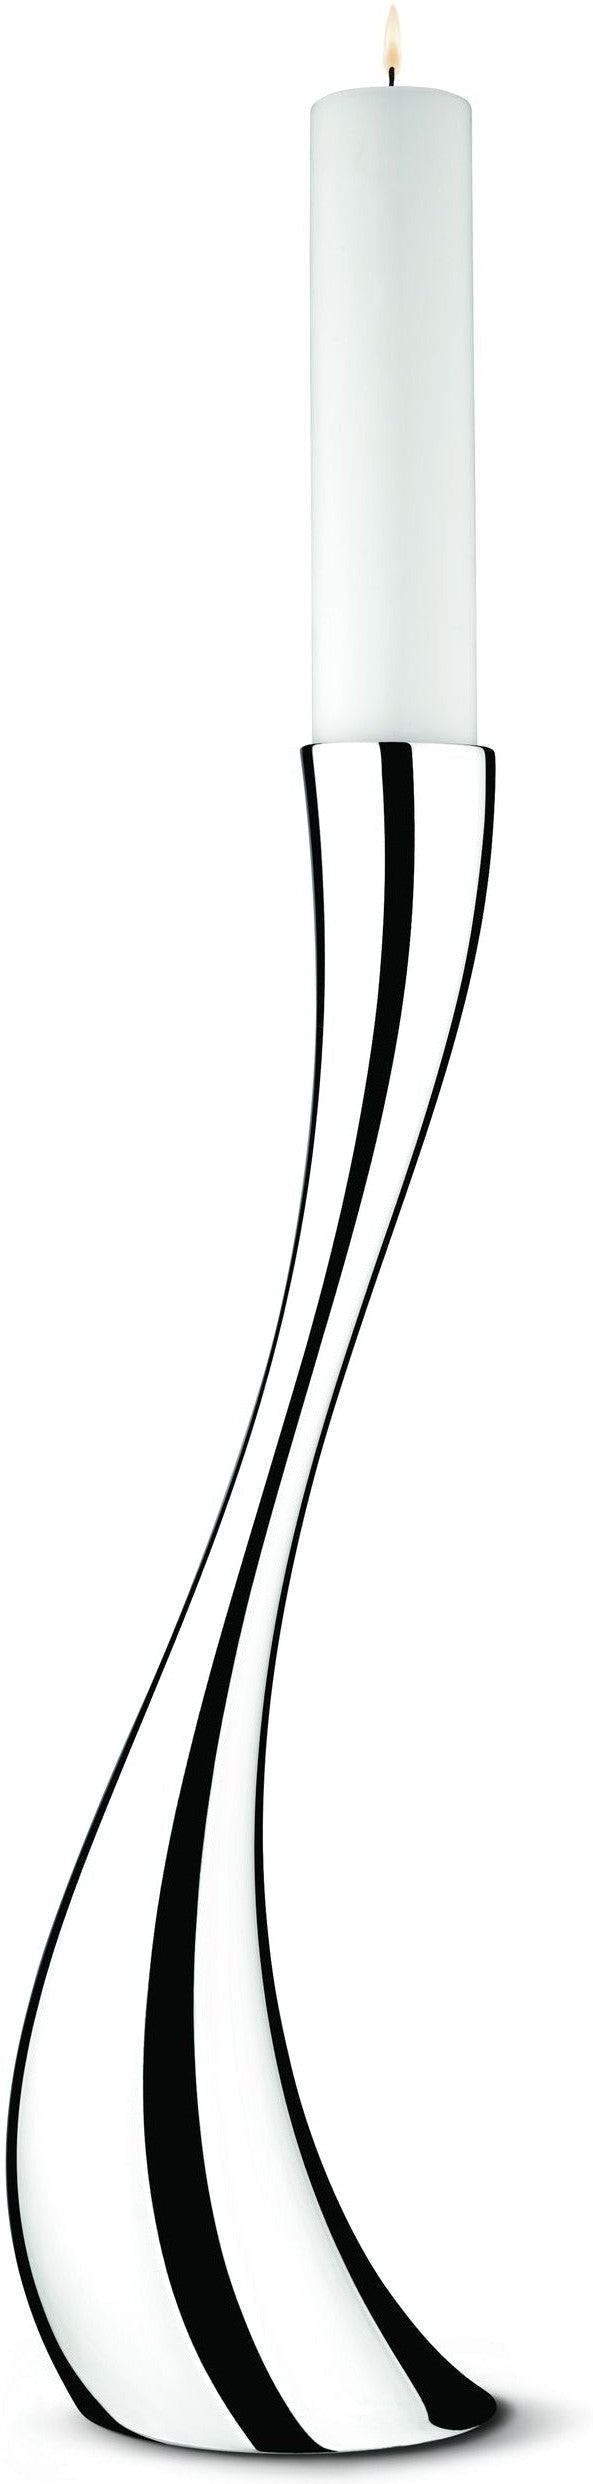 Georg Jensen Cobra golvljushållare svart/vitt, 60 cm